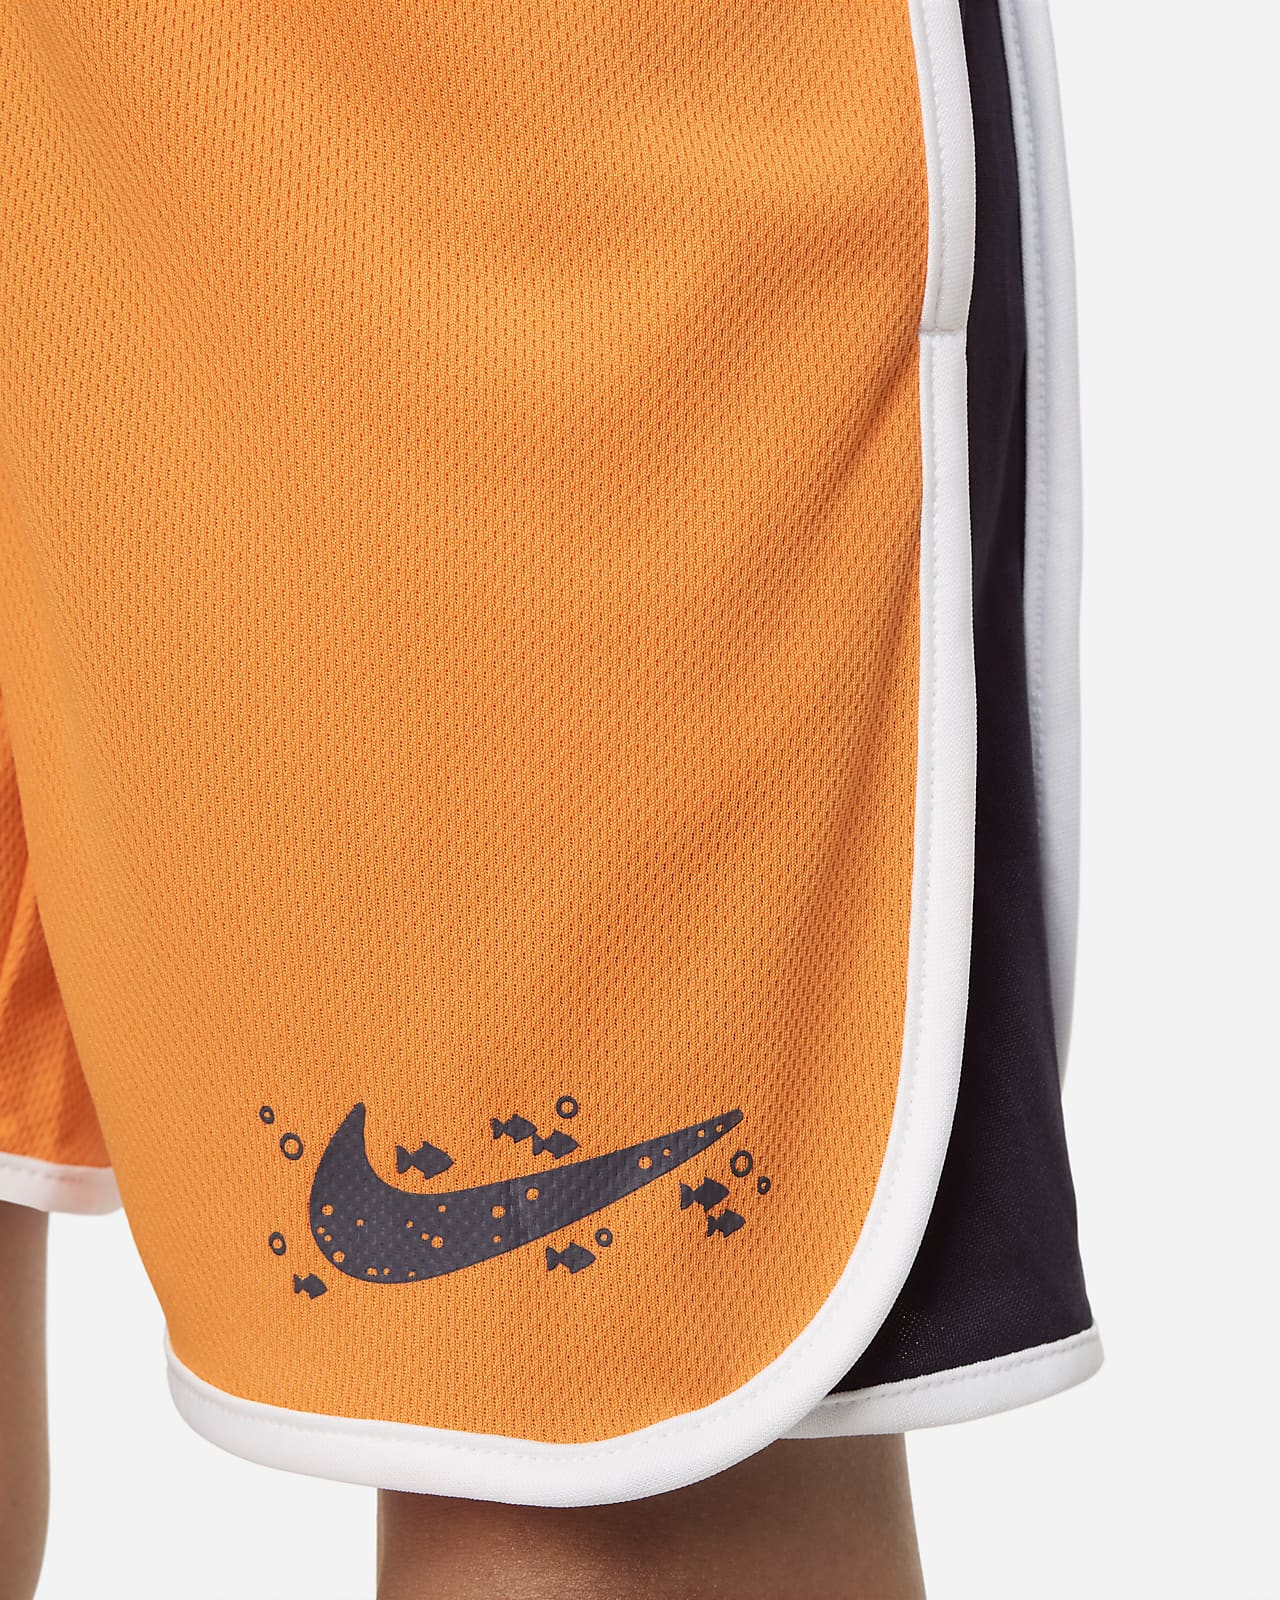 Nike shorts girls 6X athletic bright orange mango neon swoosh soccer  basketball